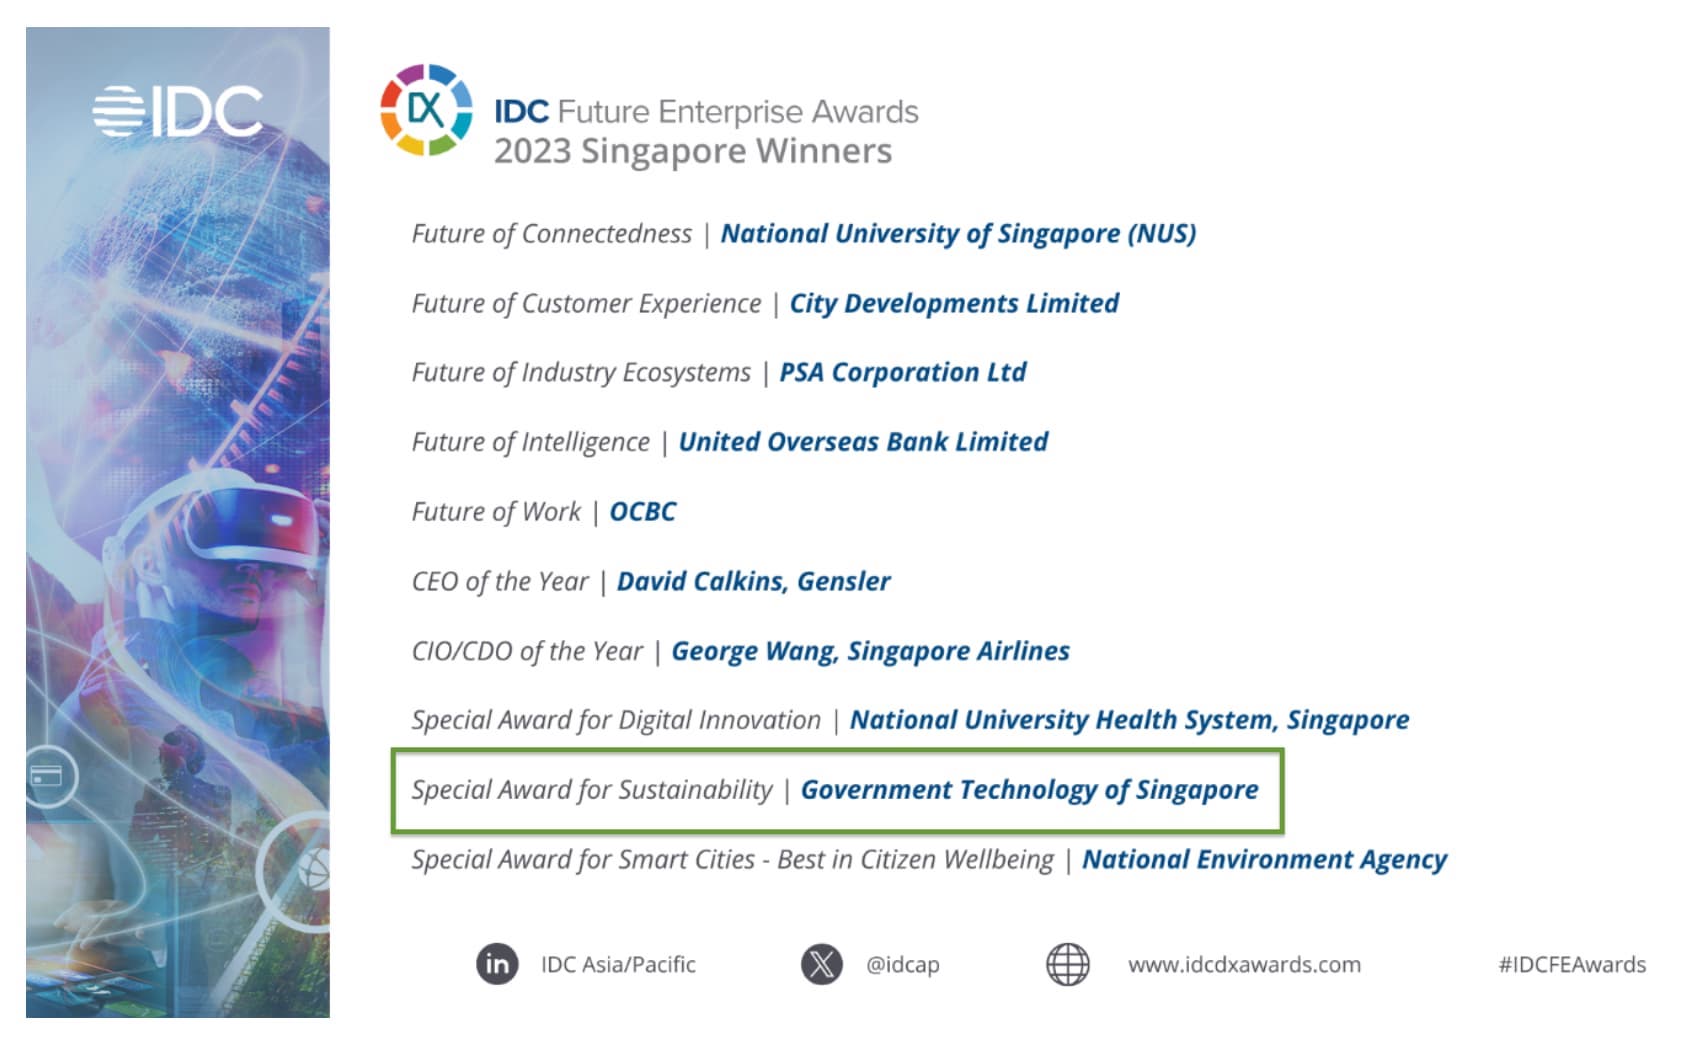 IDC Future Enterprise Awards 2023 - Singapore Winners